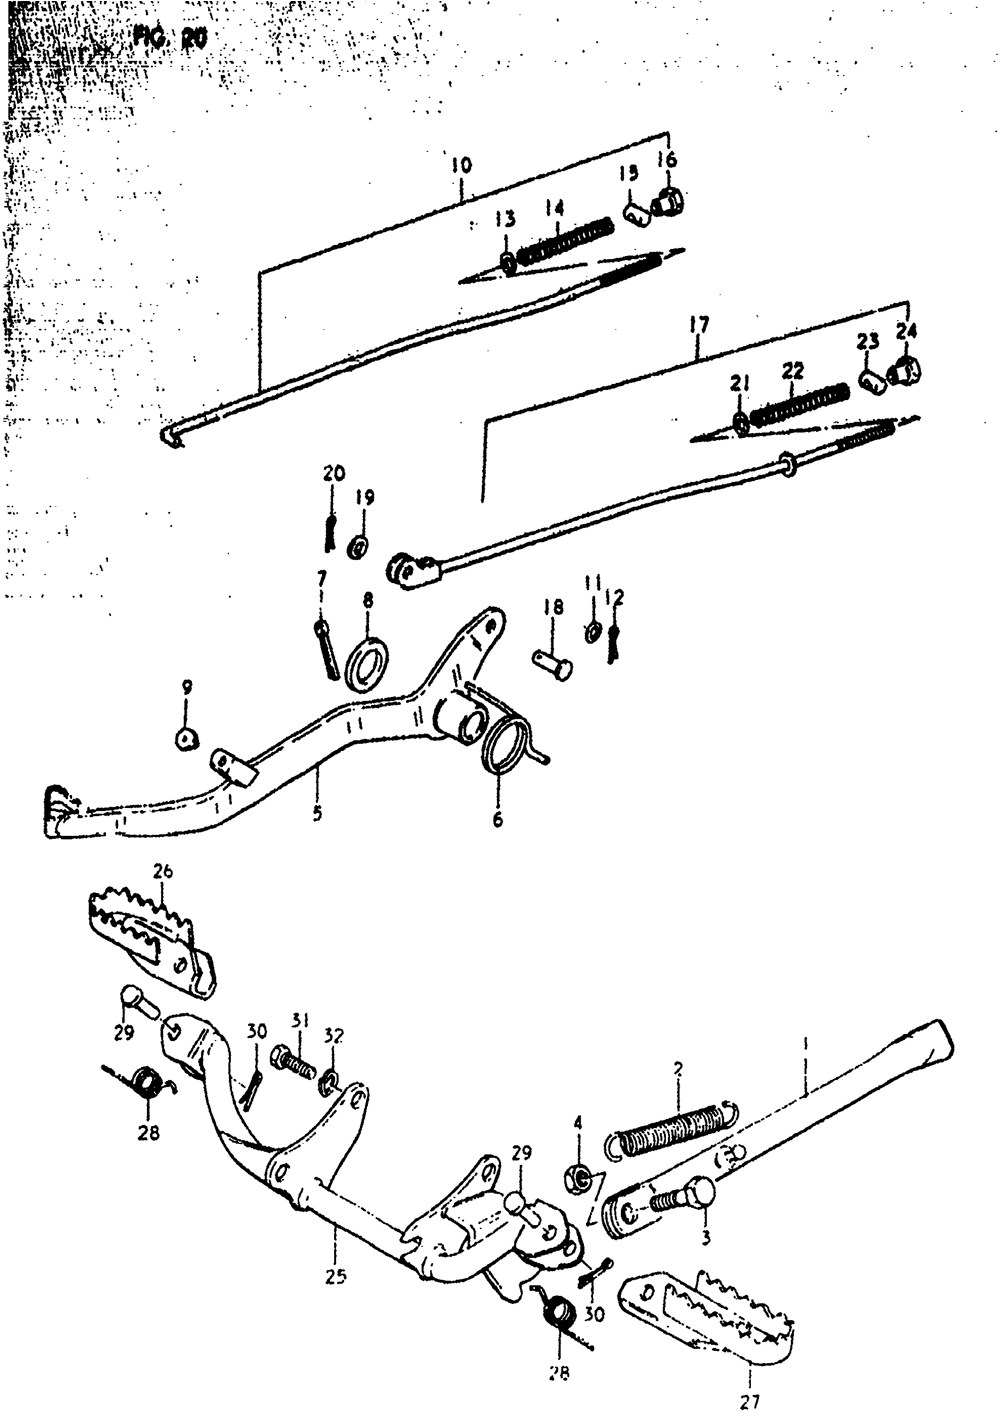 Prop stand - brake pedal